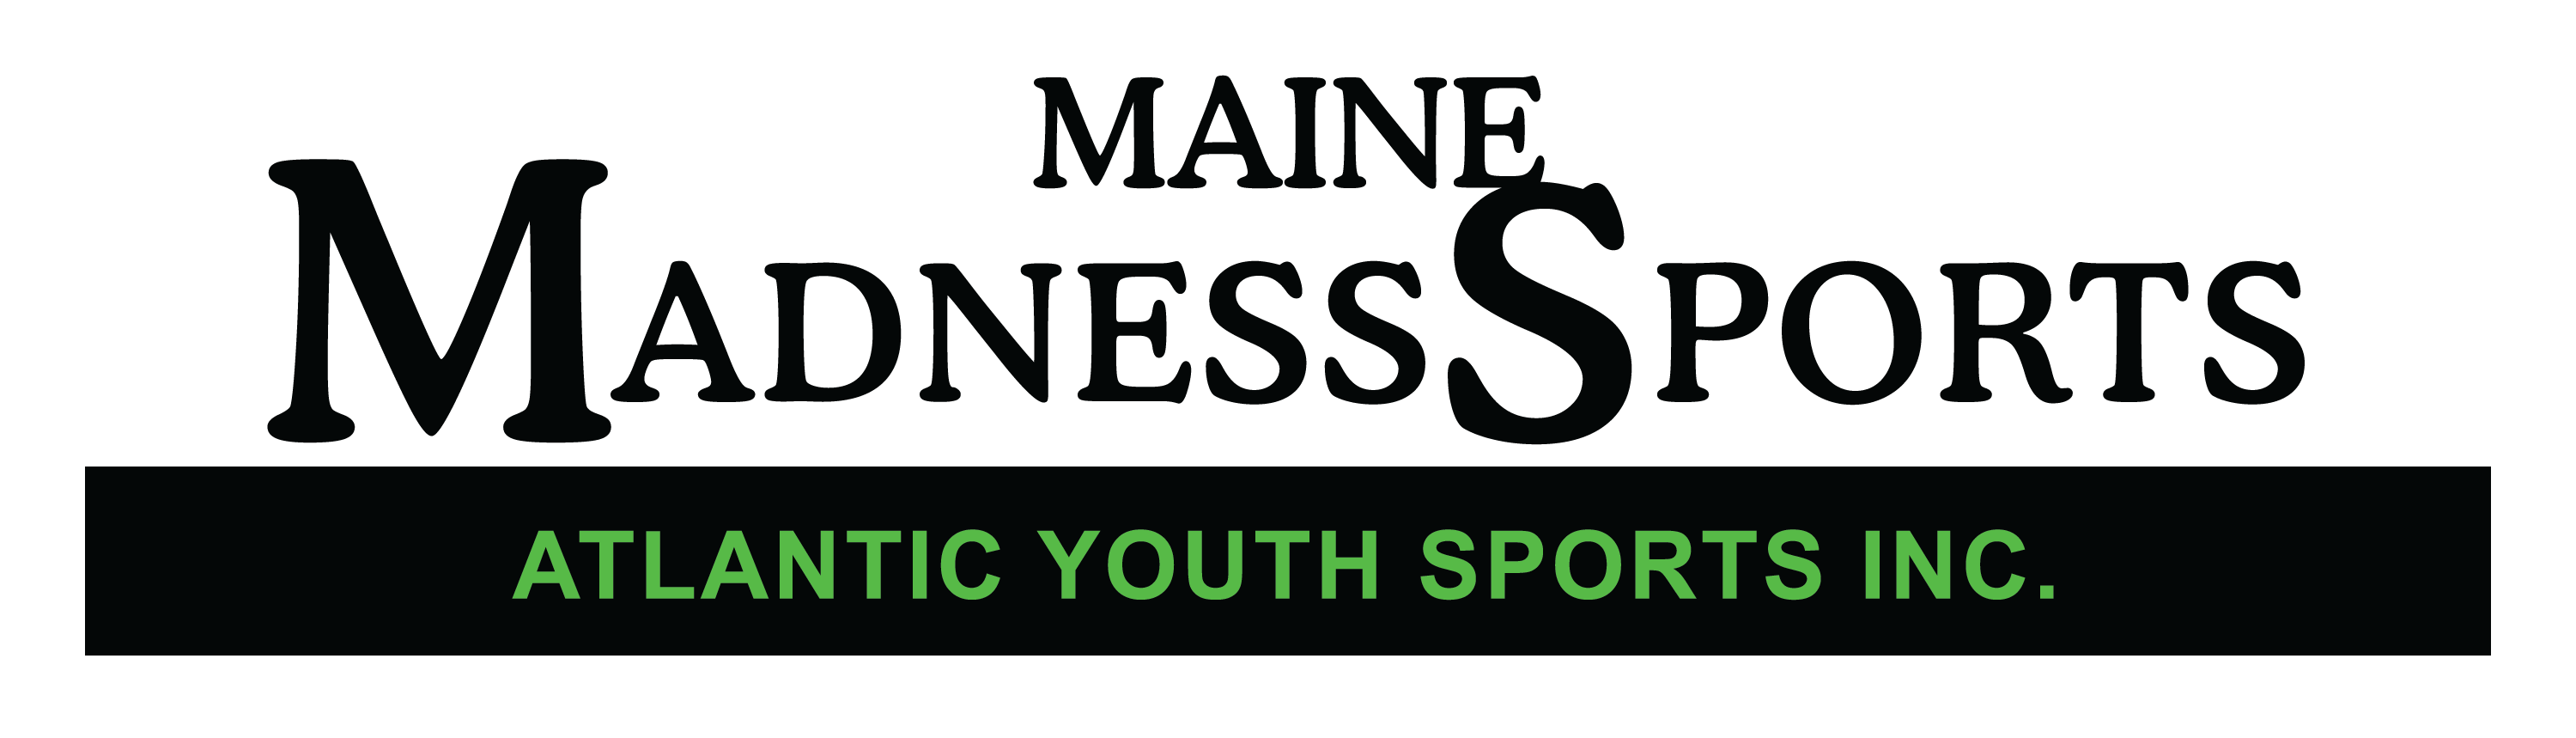 Maine Madness Sports Logo 01